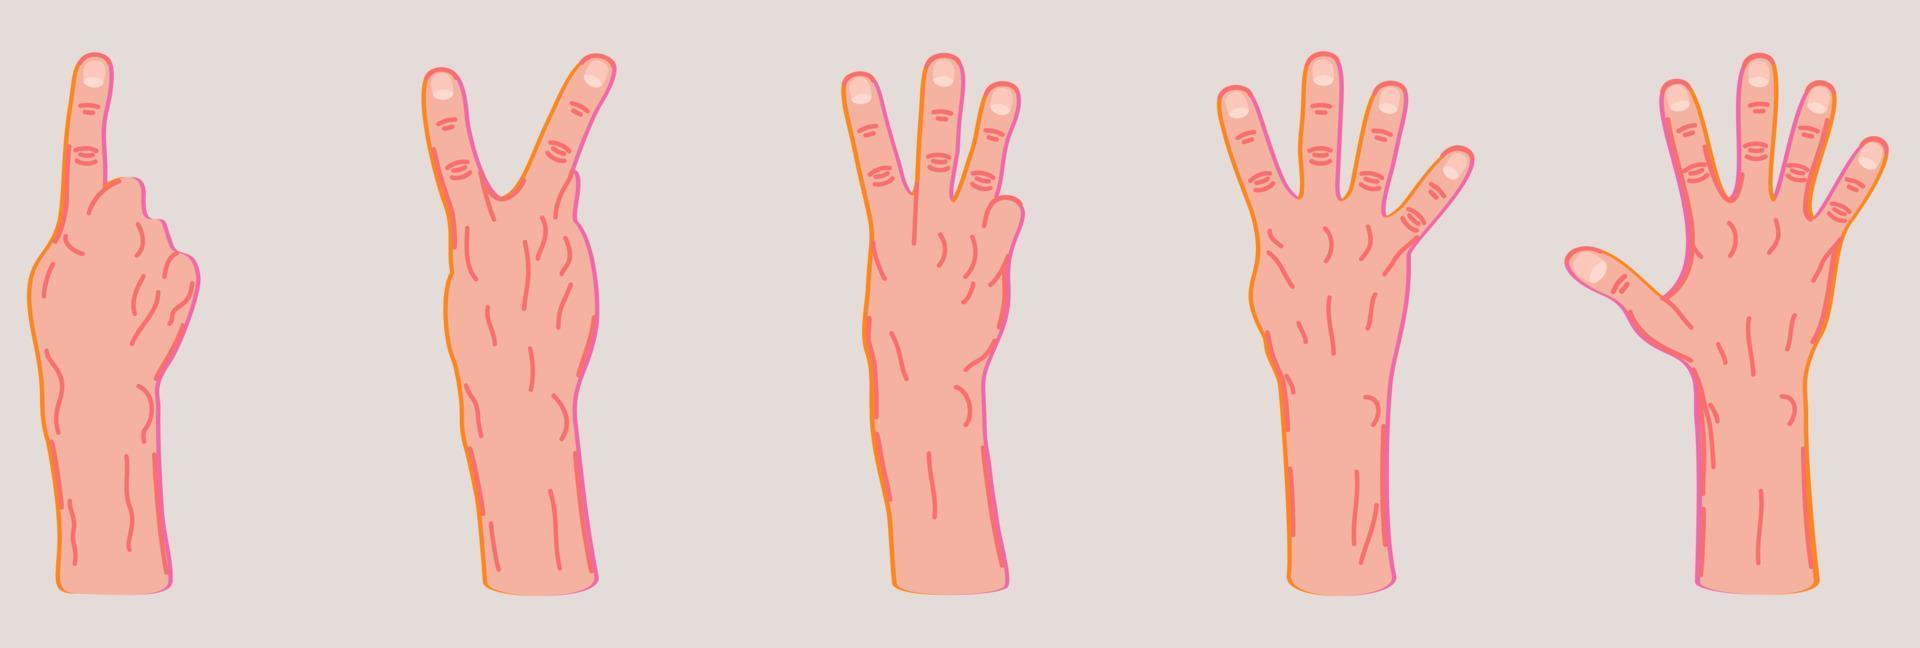 conjunto de vetores de diferentes gestos de mão.